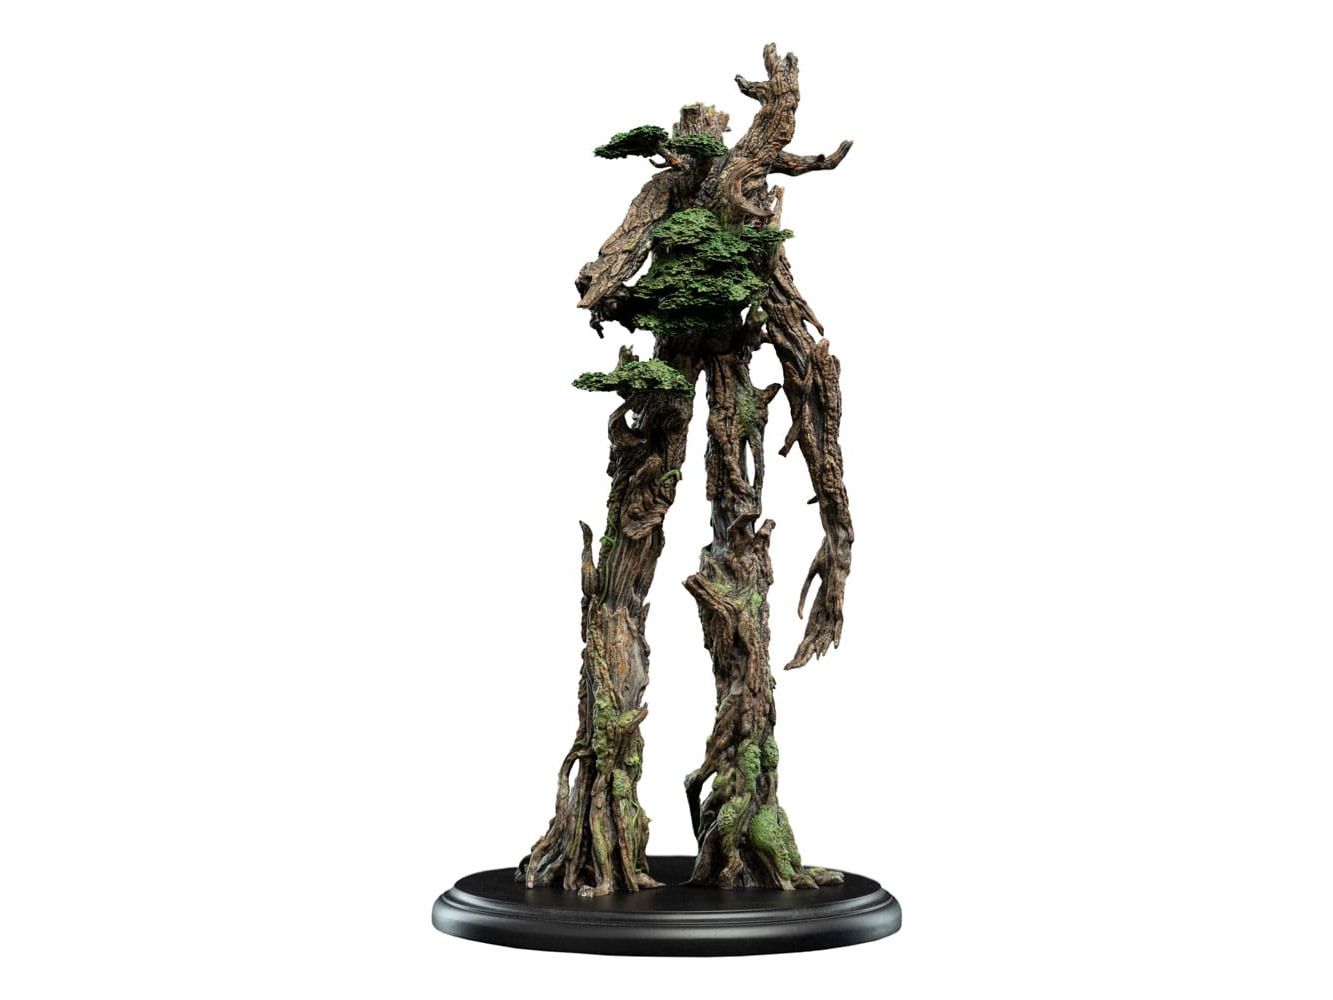 Herr der Ringe Mini Statue Treebeard 21 cm | 42775